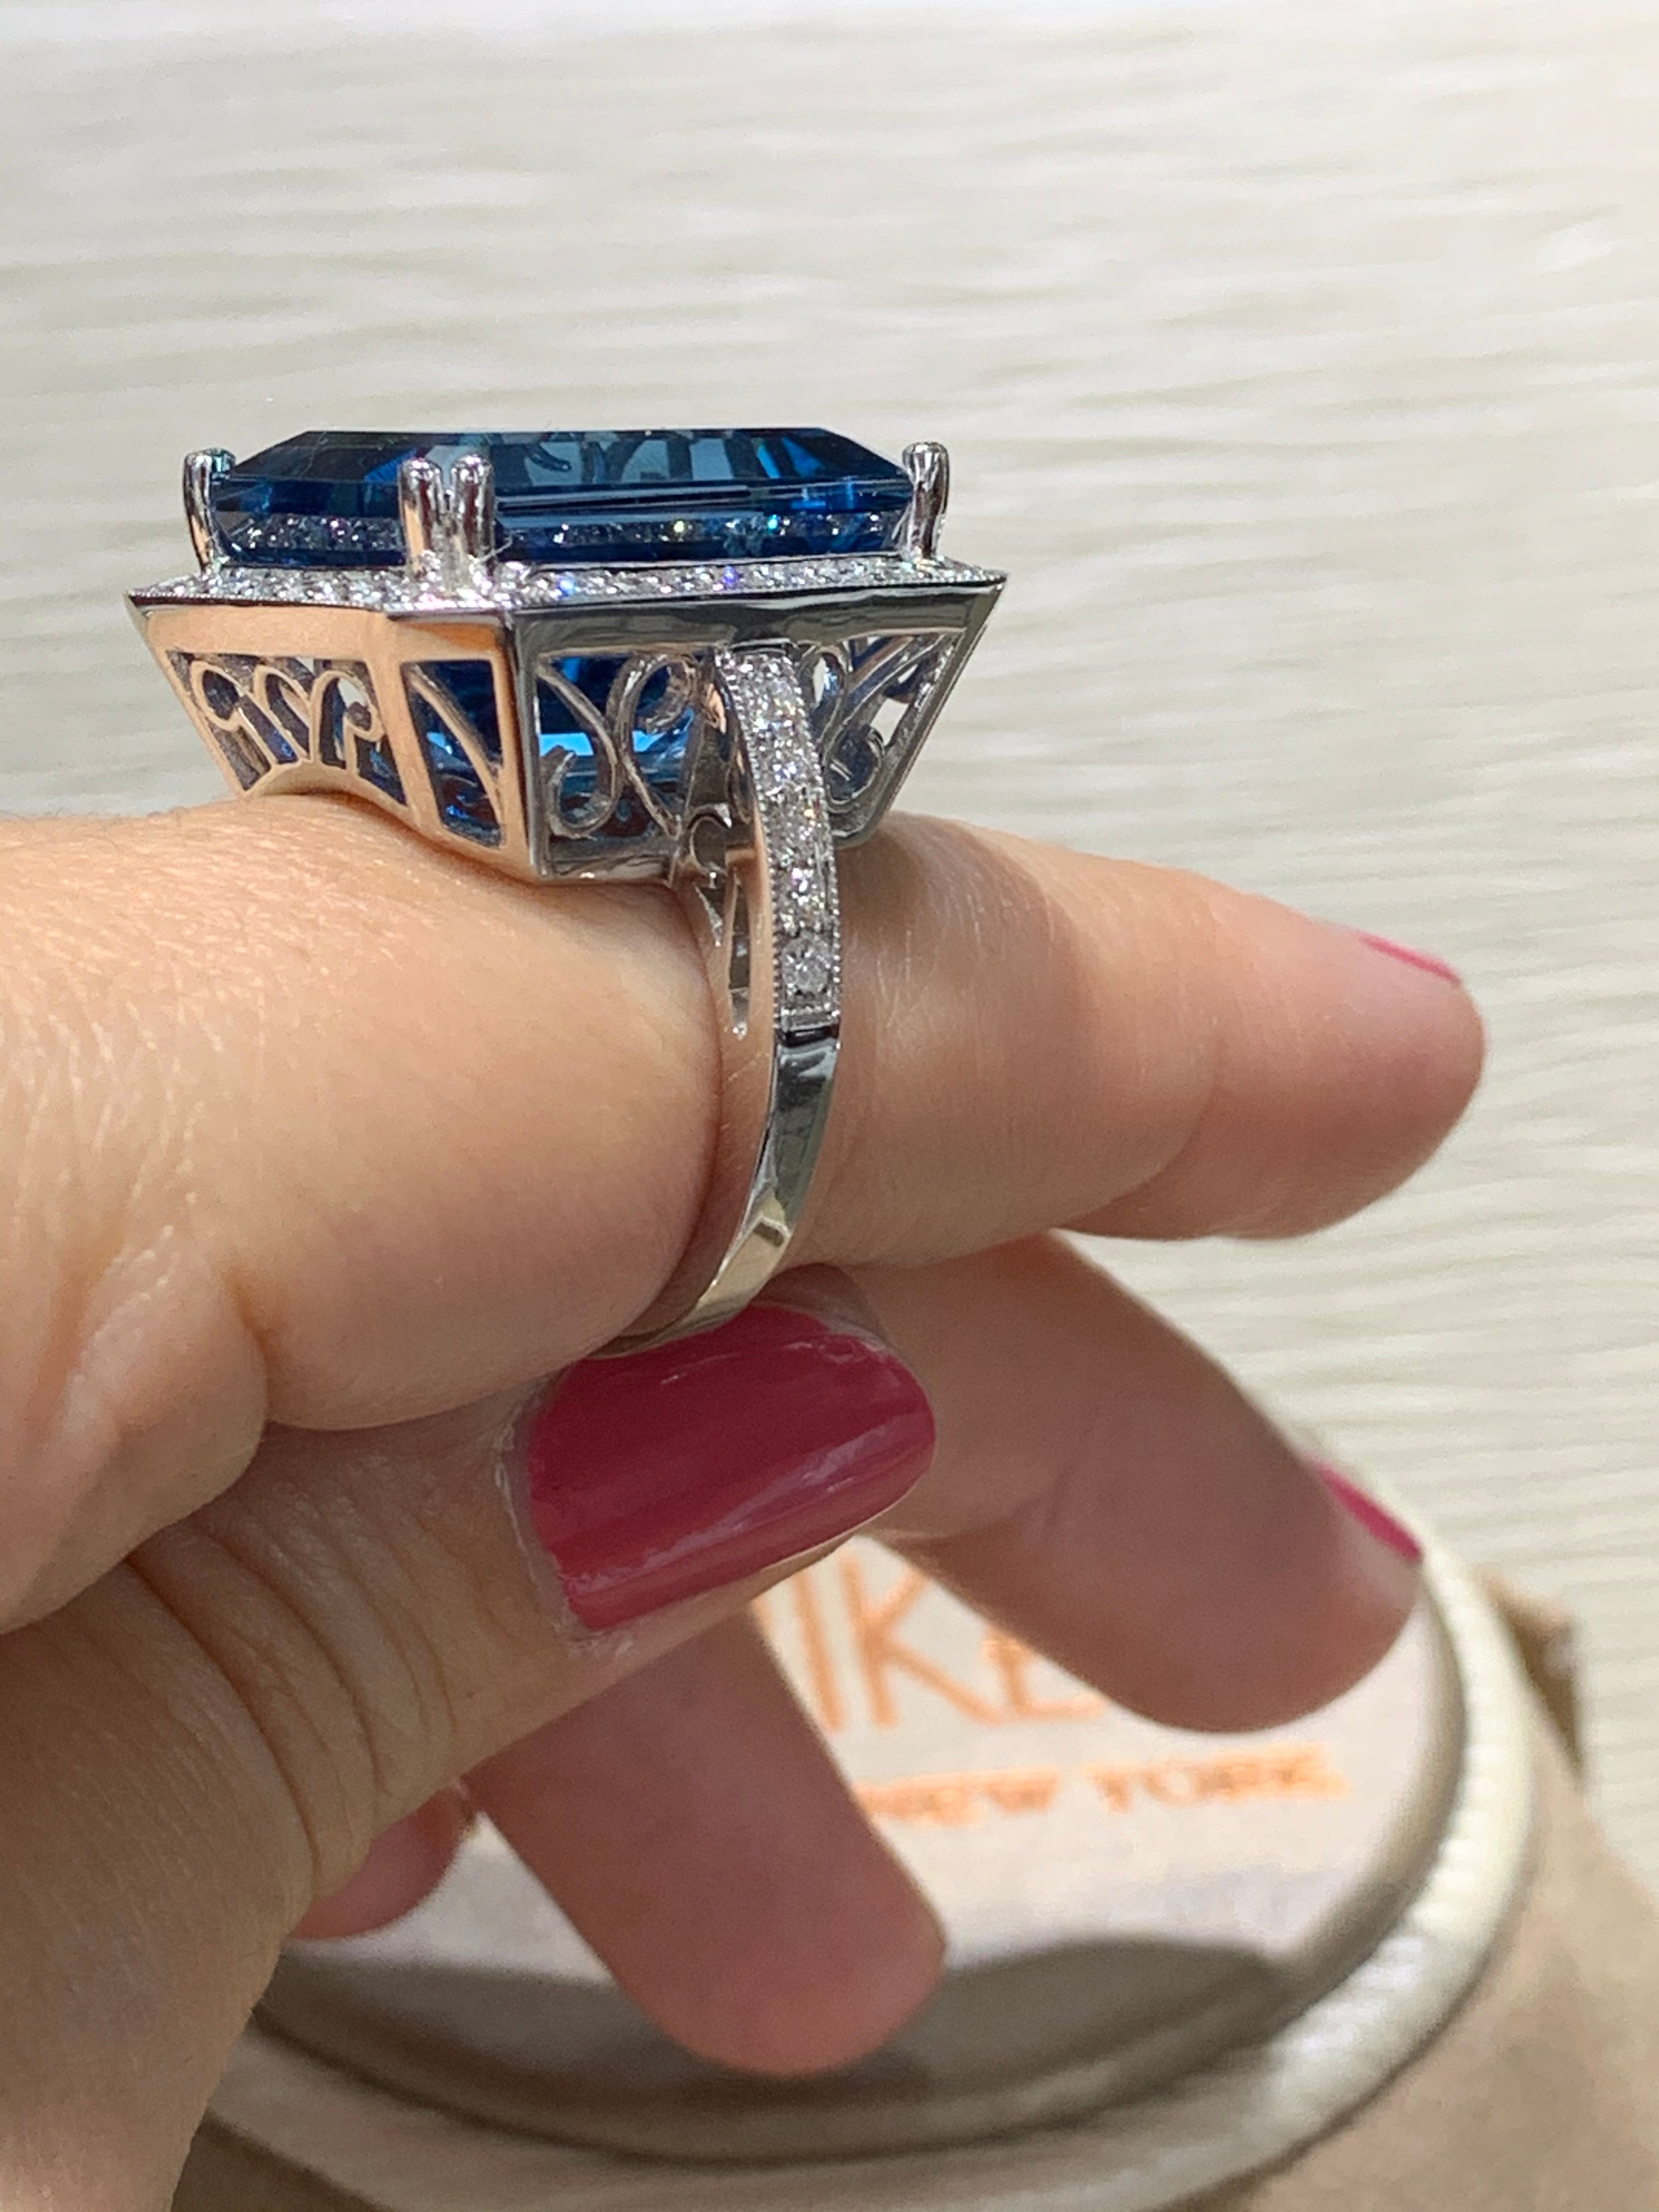 Diamond and 26.00ct London Blue Topaz Ring - HANIKEN JEWELERS NEW-YORK